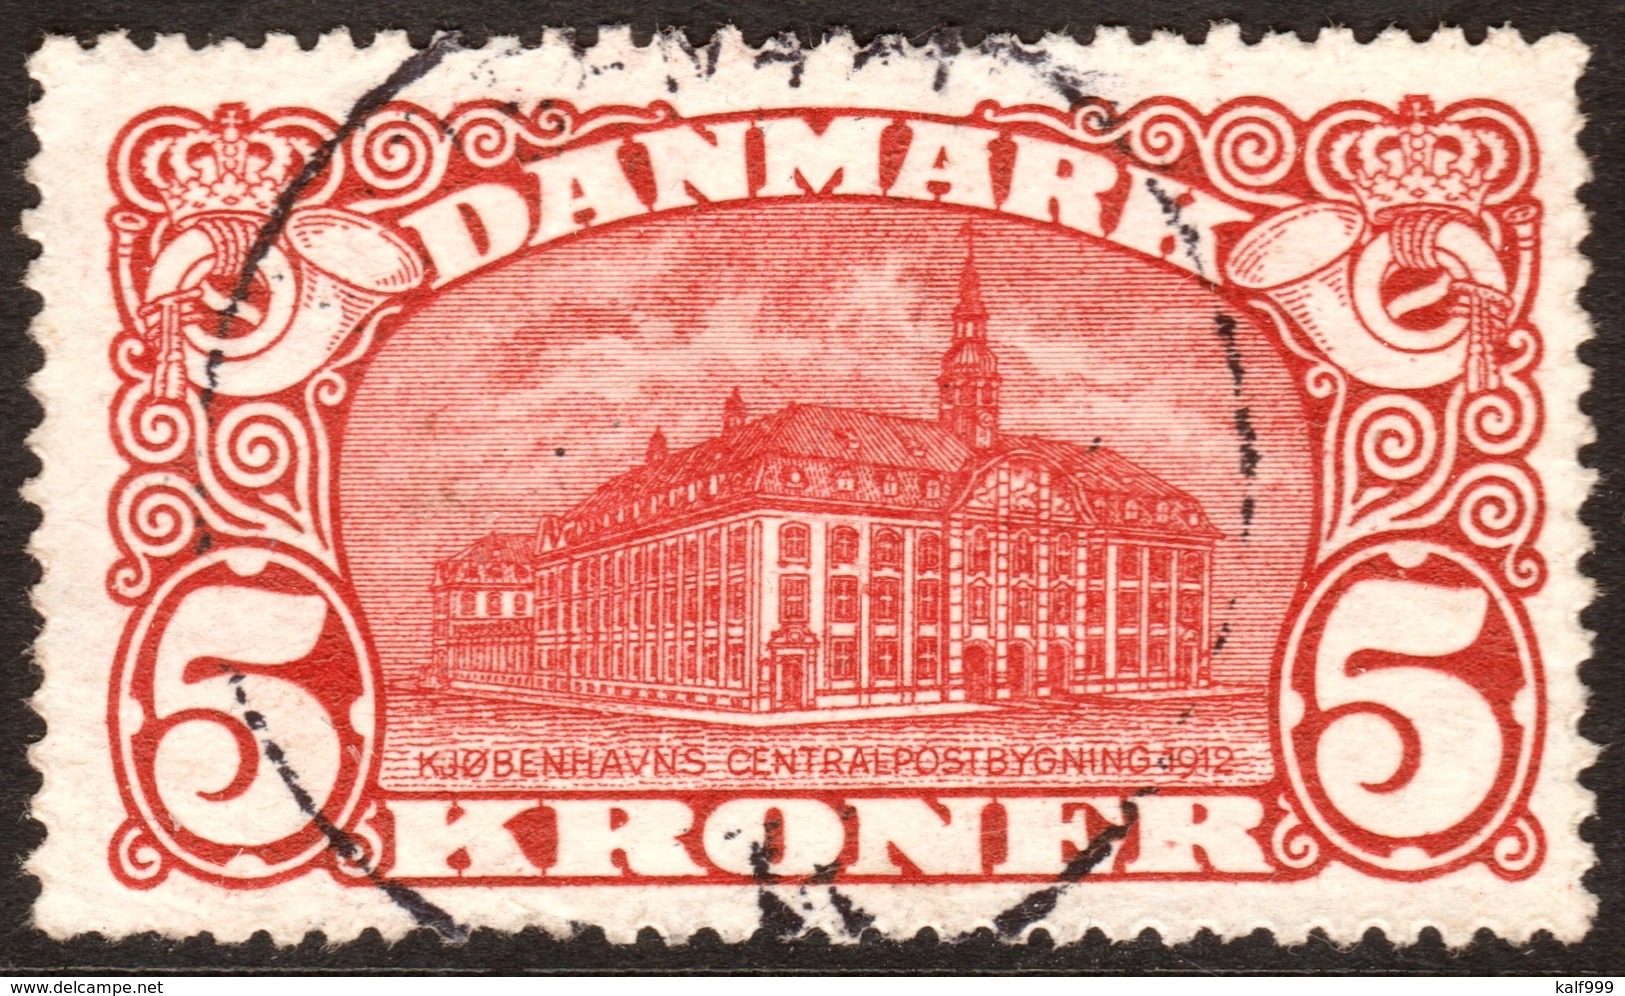 ~~~  Denmark 1915 - Post Office Building Key Value Perf 14:14½  - Mi. 81 (o) - Cat. 120.00 Euro  ~~~ - Usado